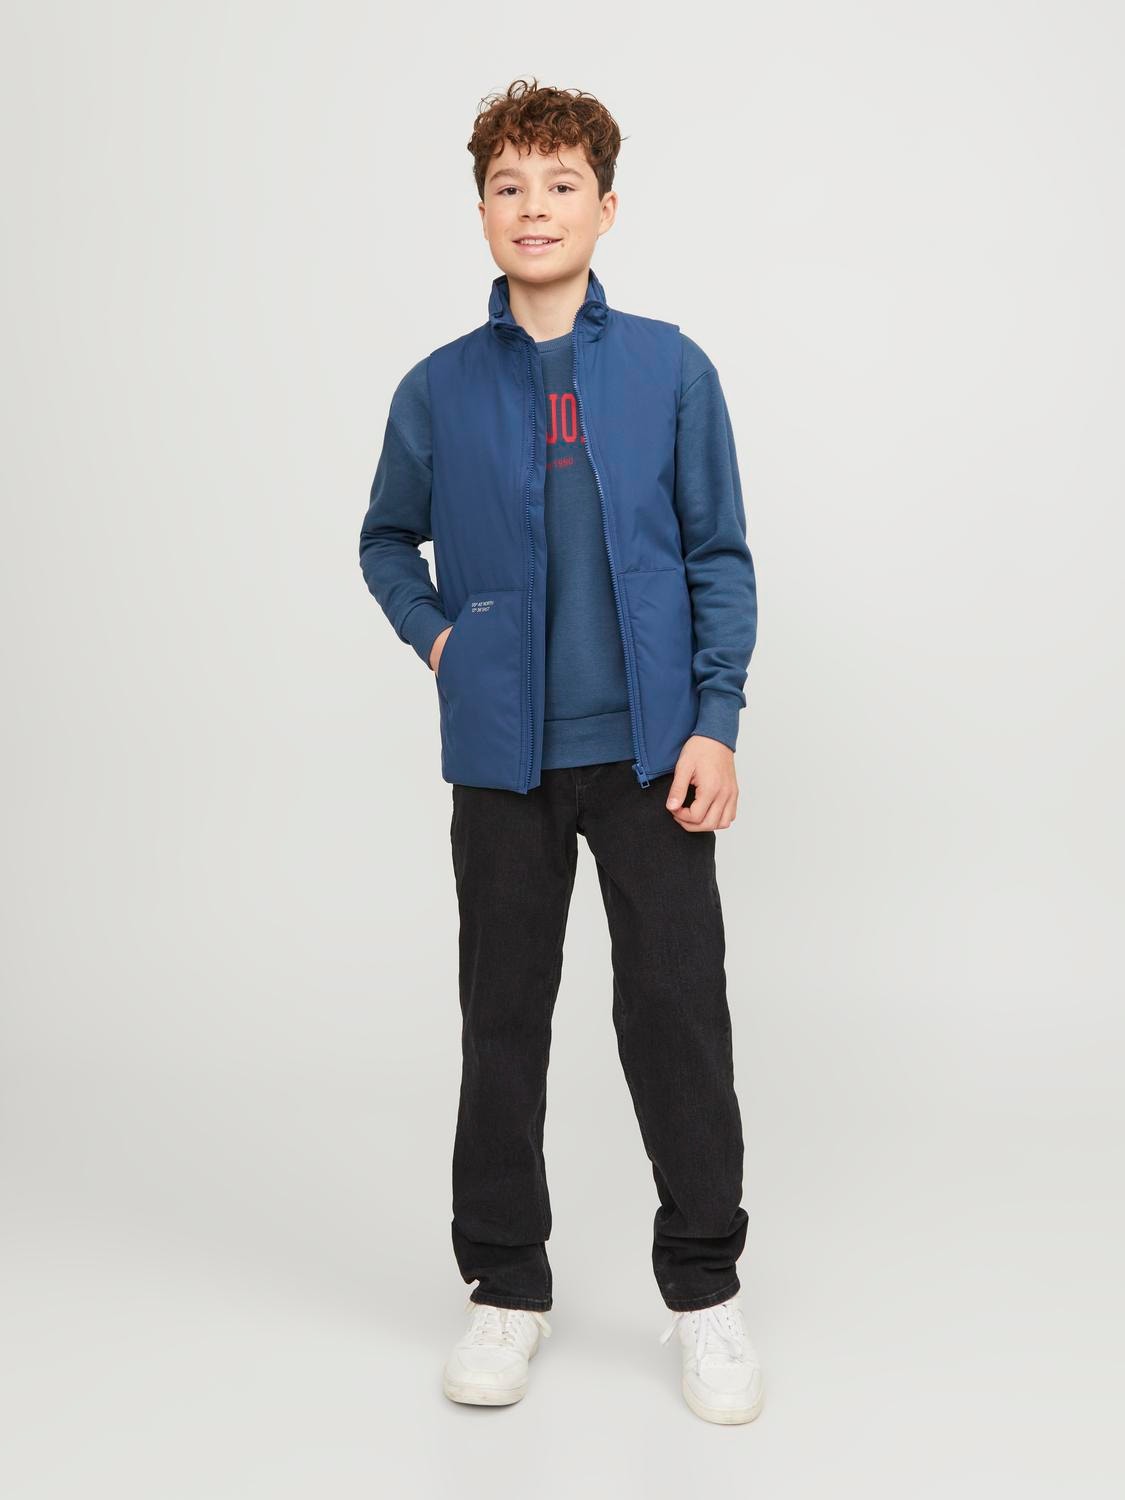 Jack & Jones Printed Crew neck Sweatshirt For boys -Ensign Blue - 12249347